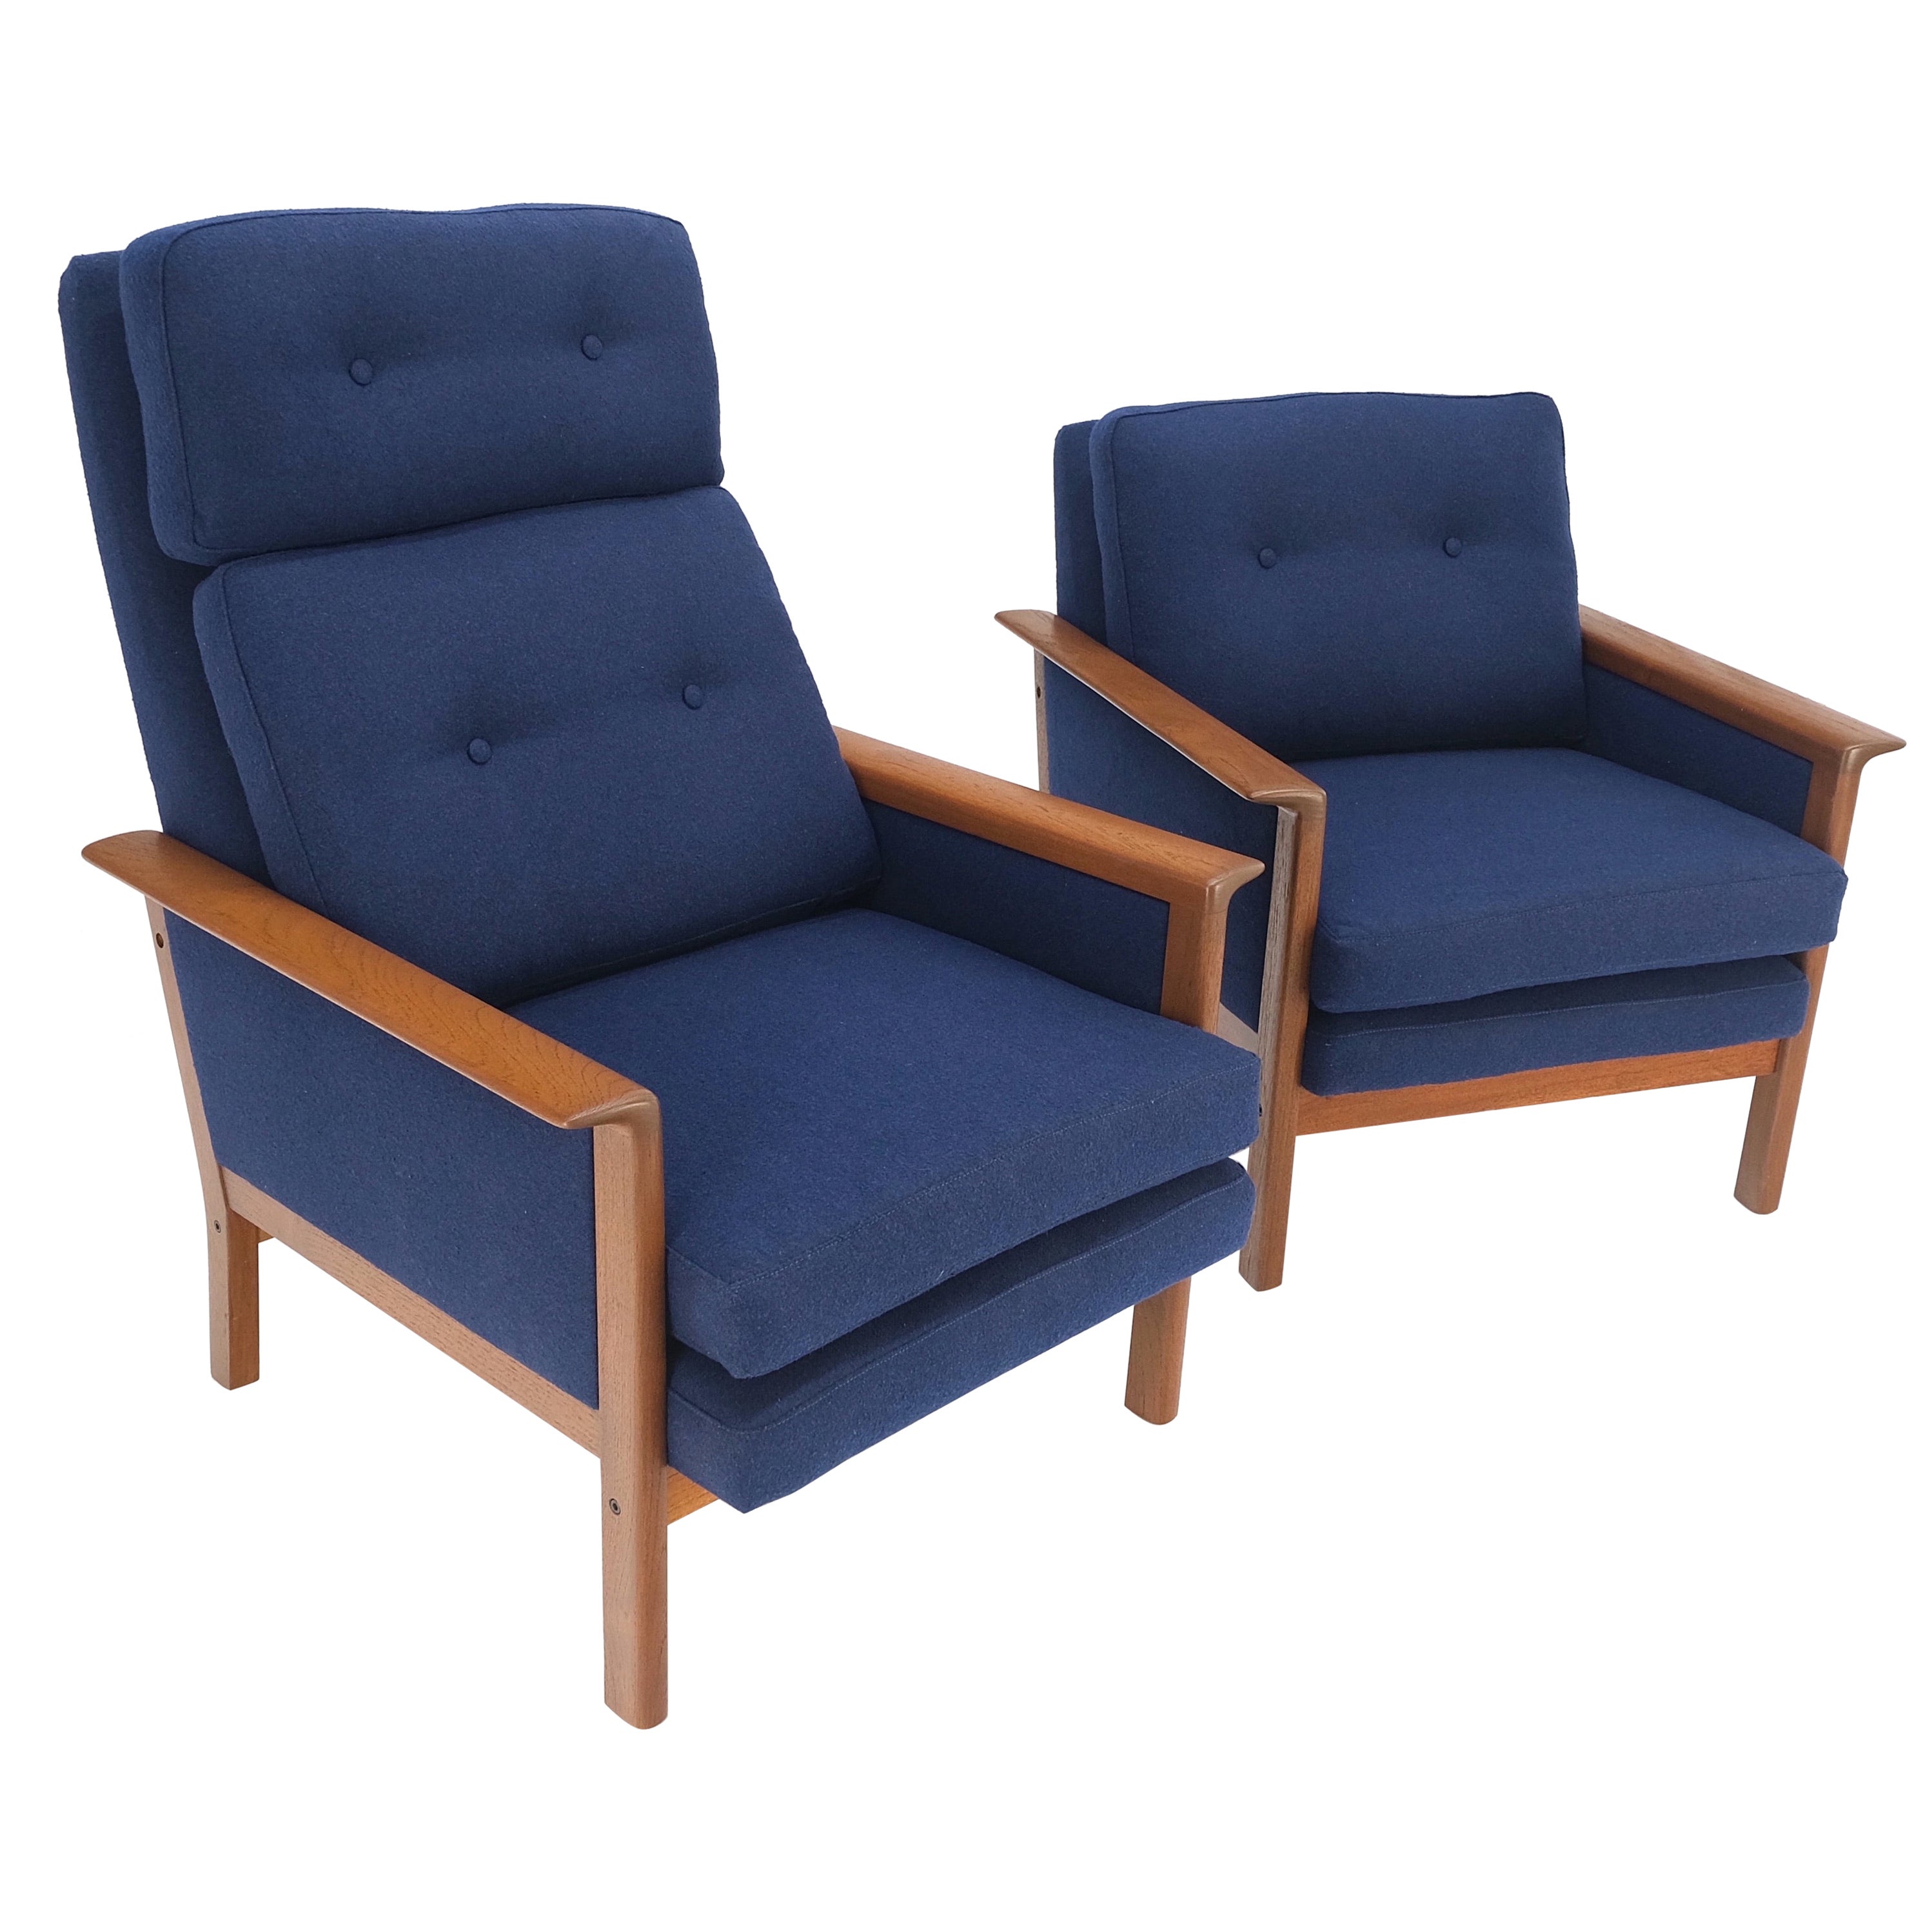 Danish Mid-Century Modern Teak Frames New Wool Upholstery Lounge Chairs Refinish For Sale